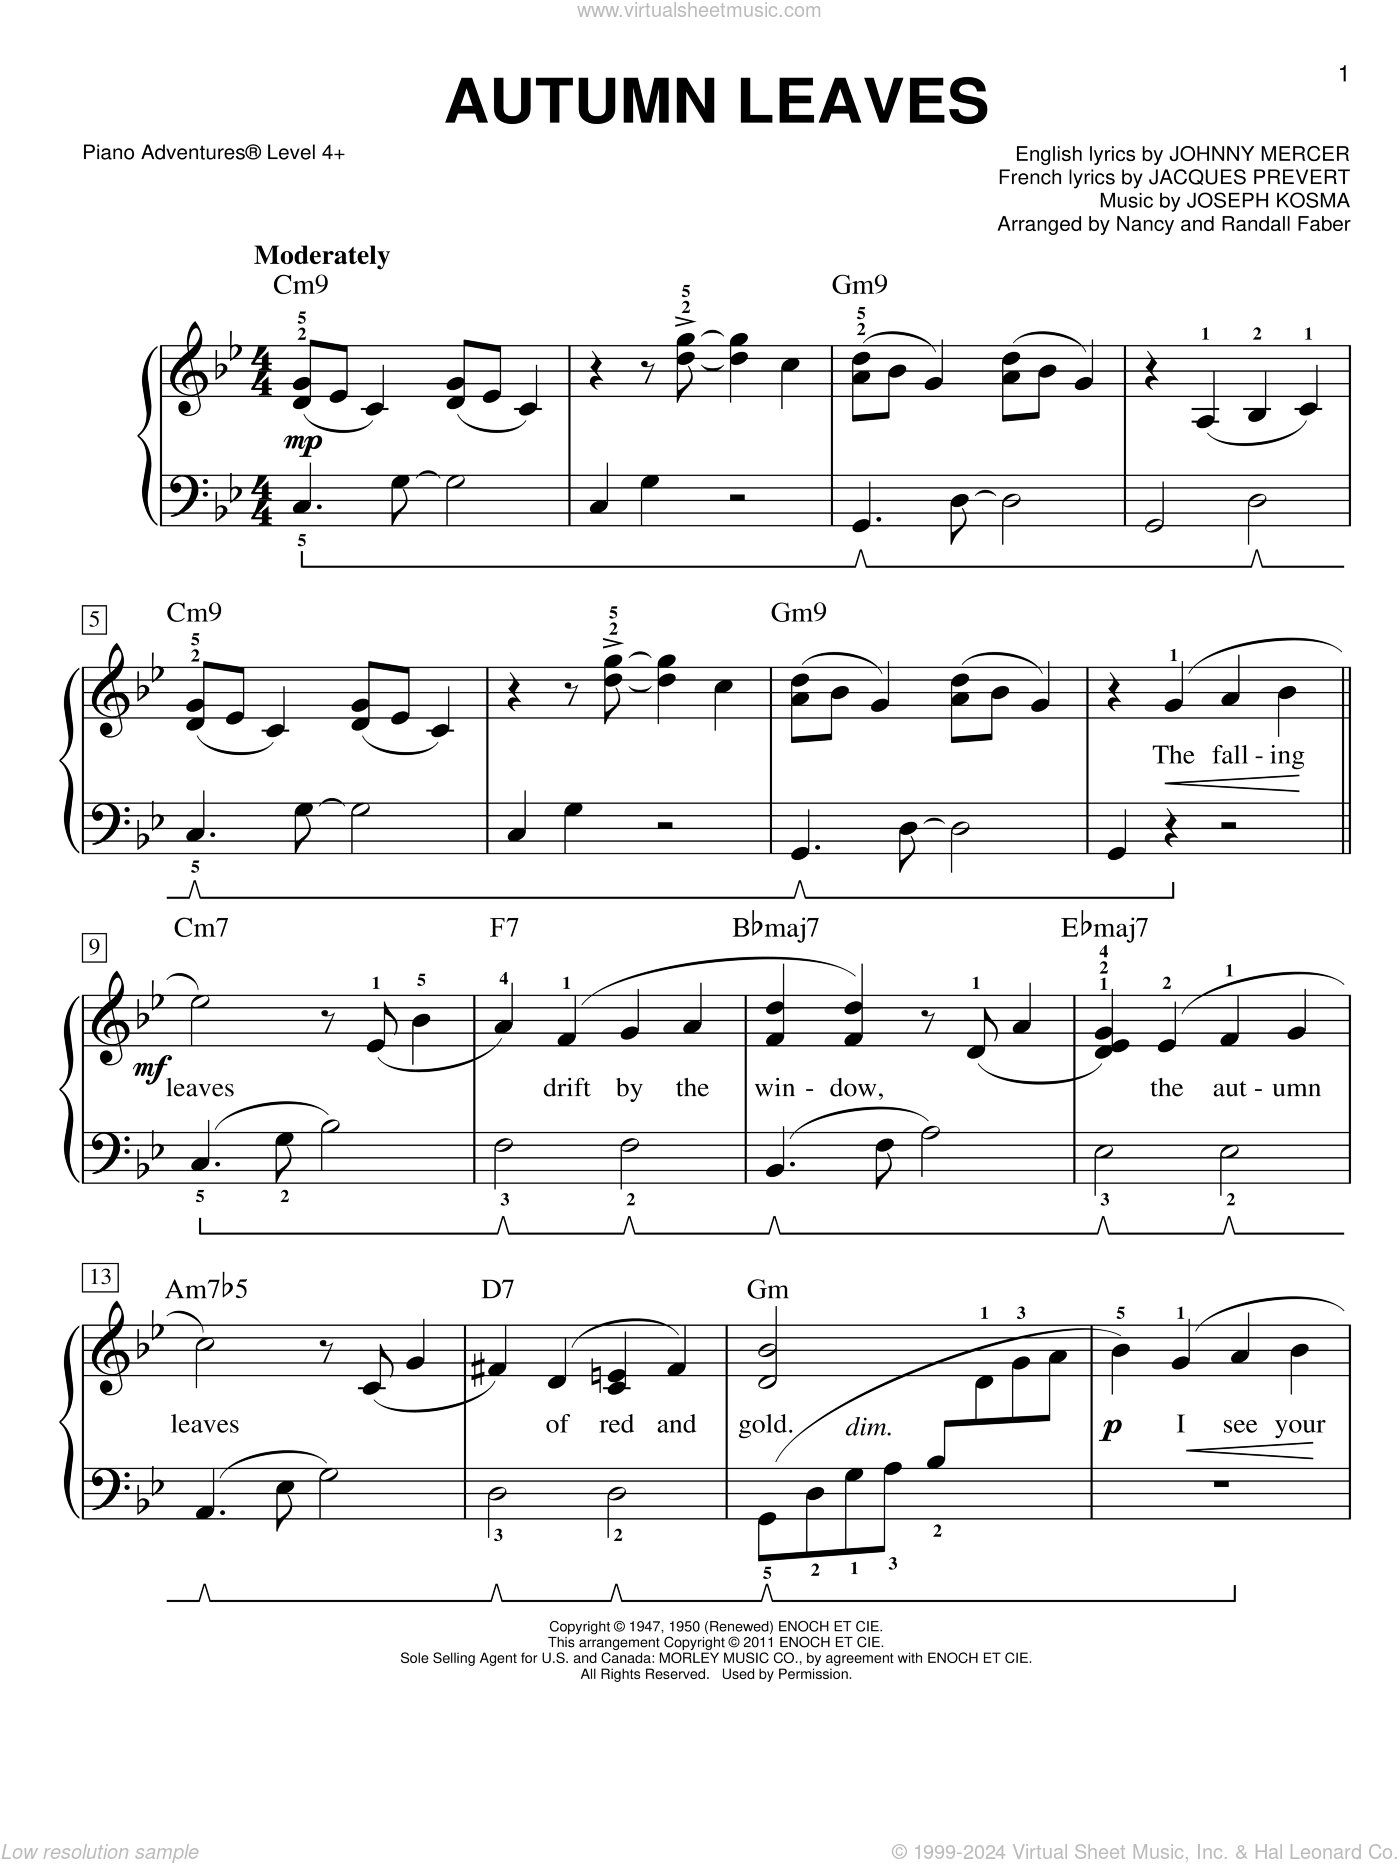 a0-piano-note